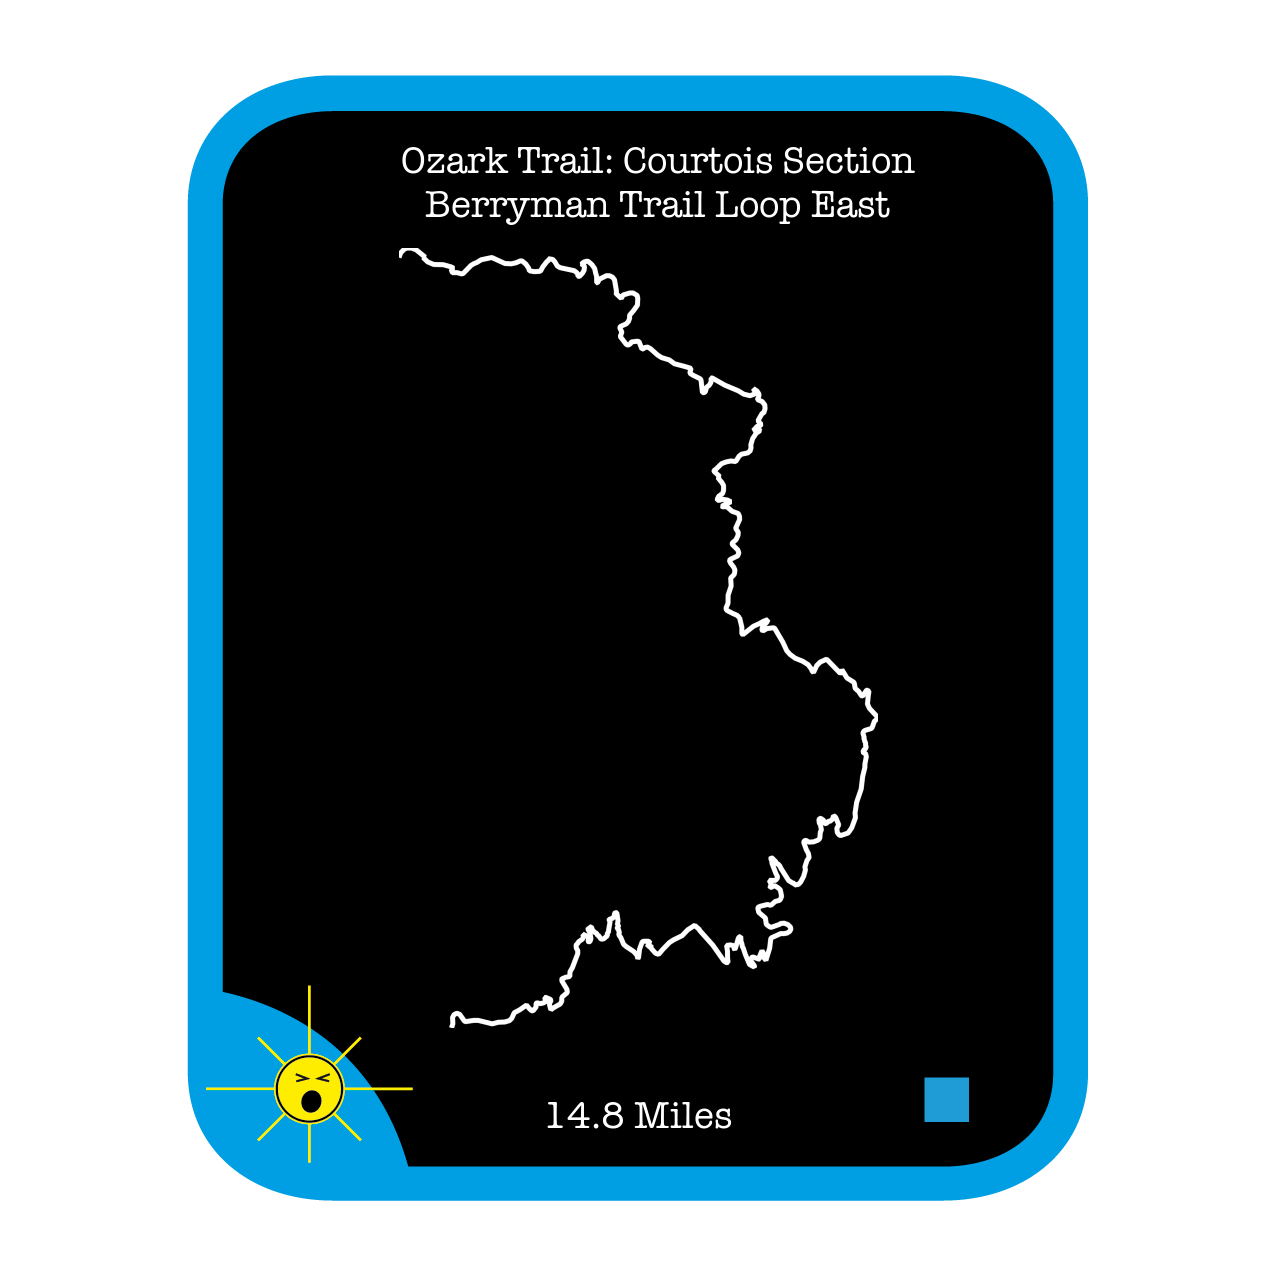 Ozark Trail: Courtois Section, Berryman Trail Loop East